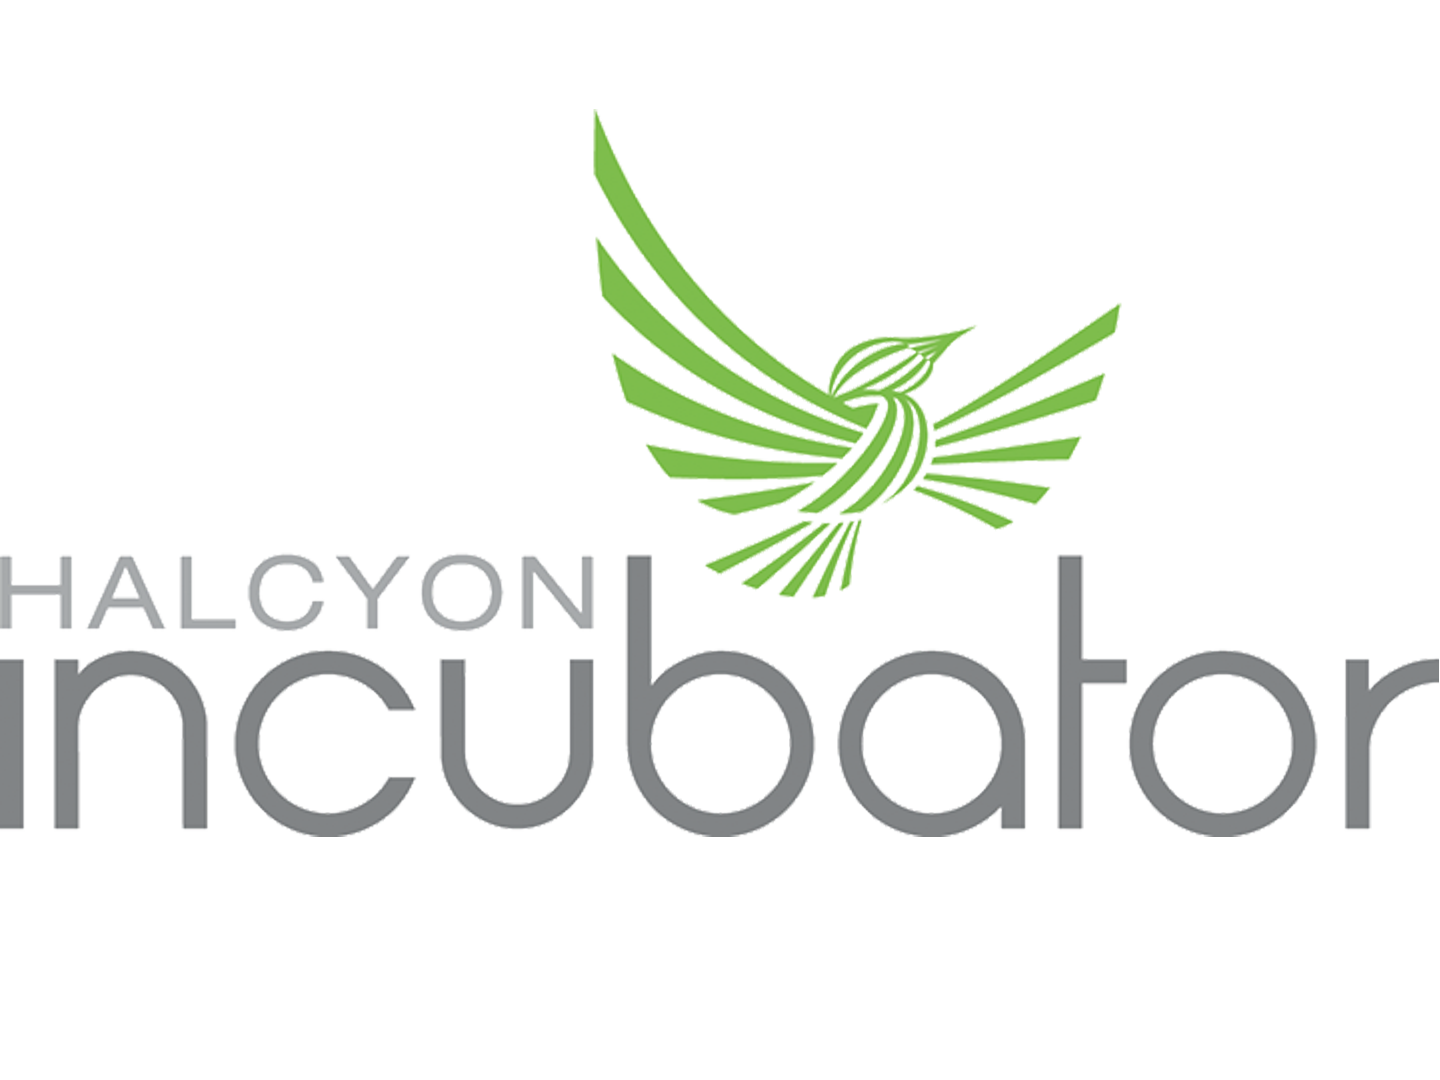 Halcyon                    Incubator                   